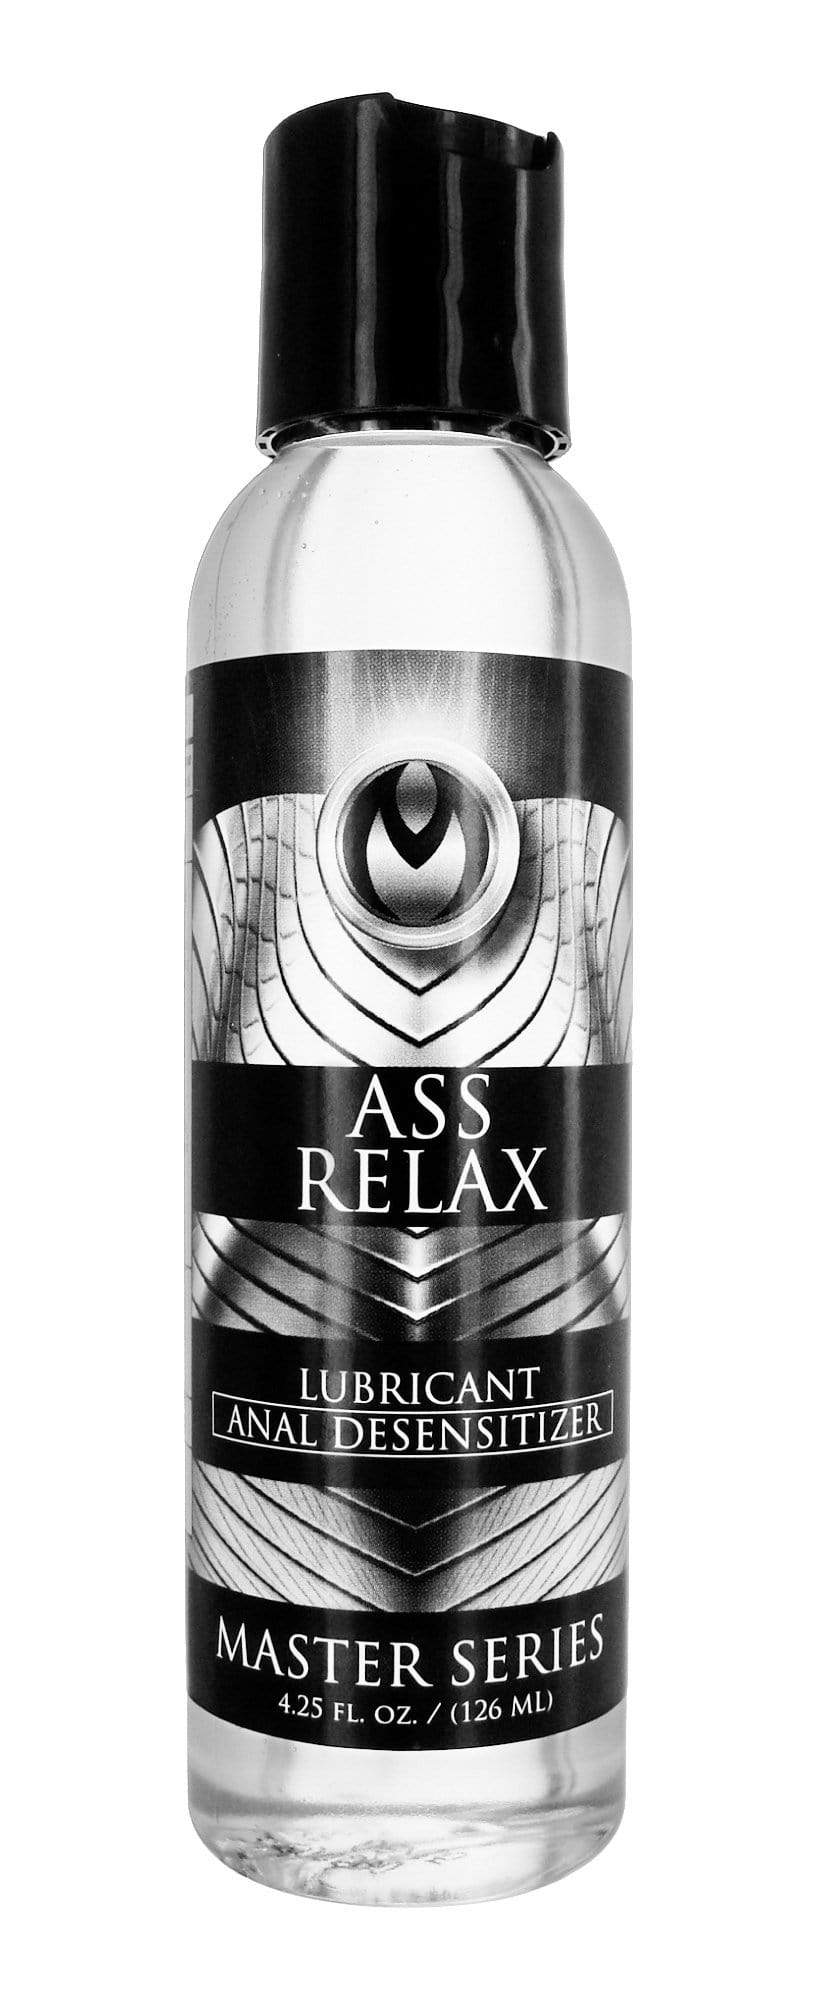 ass relax lubricant anal desensitizer 4 25 fl oz